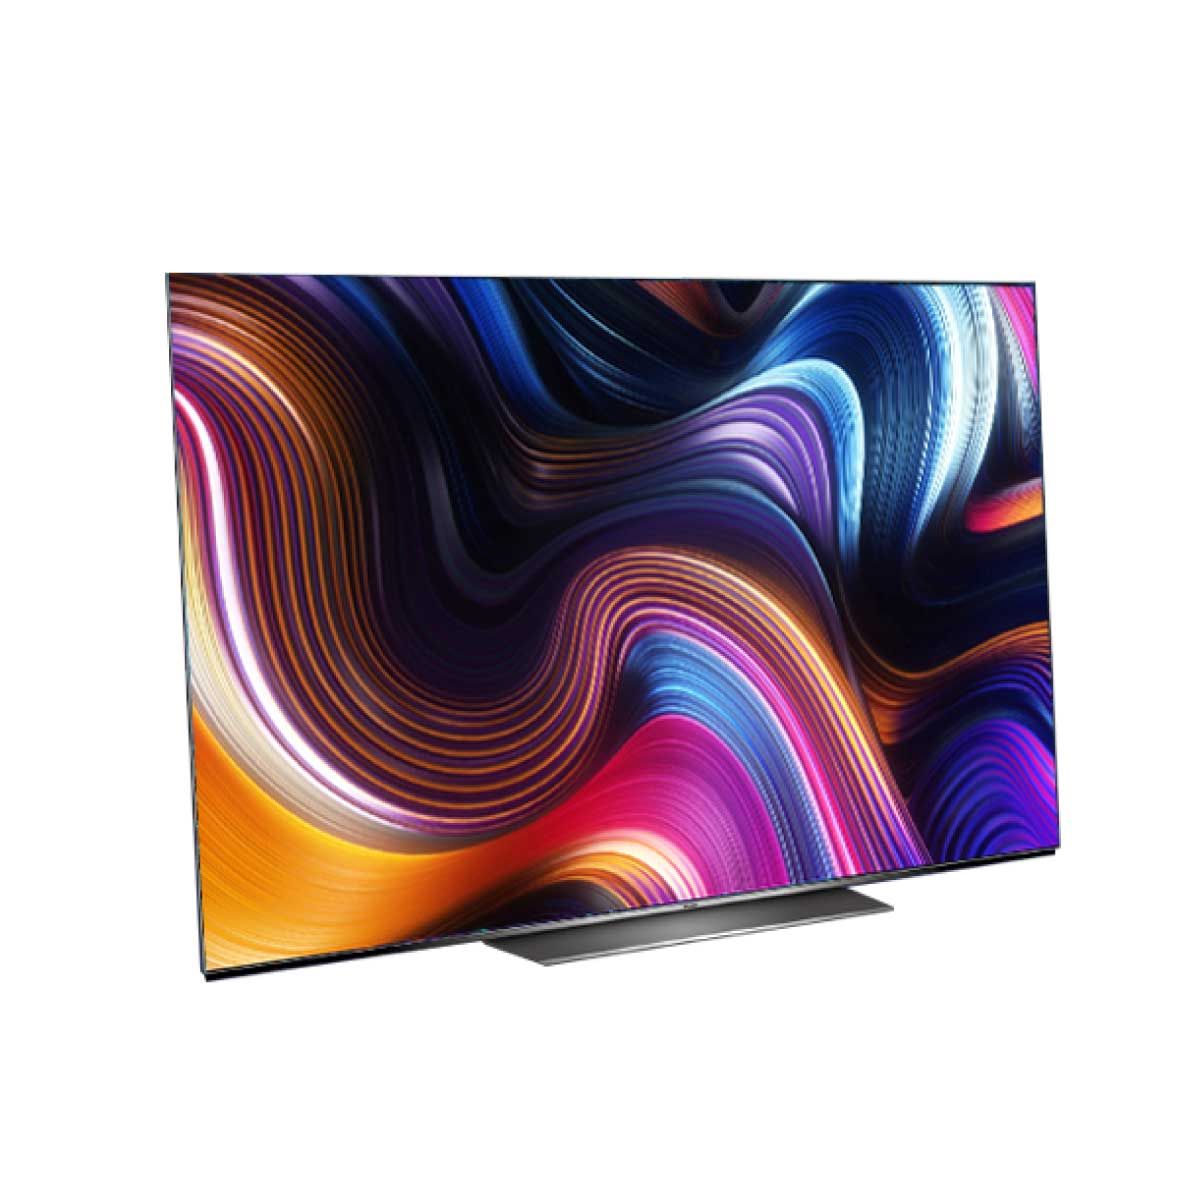 HAIER  OLED Android TV 4K  รุ่น H65SUG สมาร์ททีวี 65 นิ้ว  Android 10.0 / 120 Hz